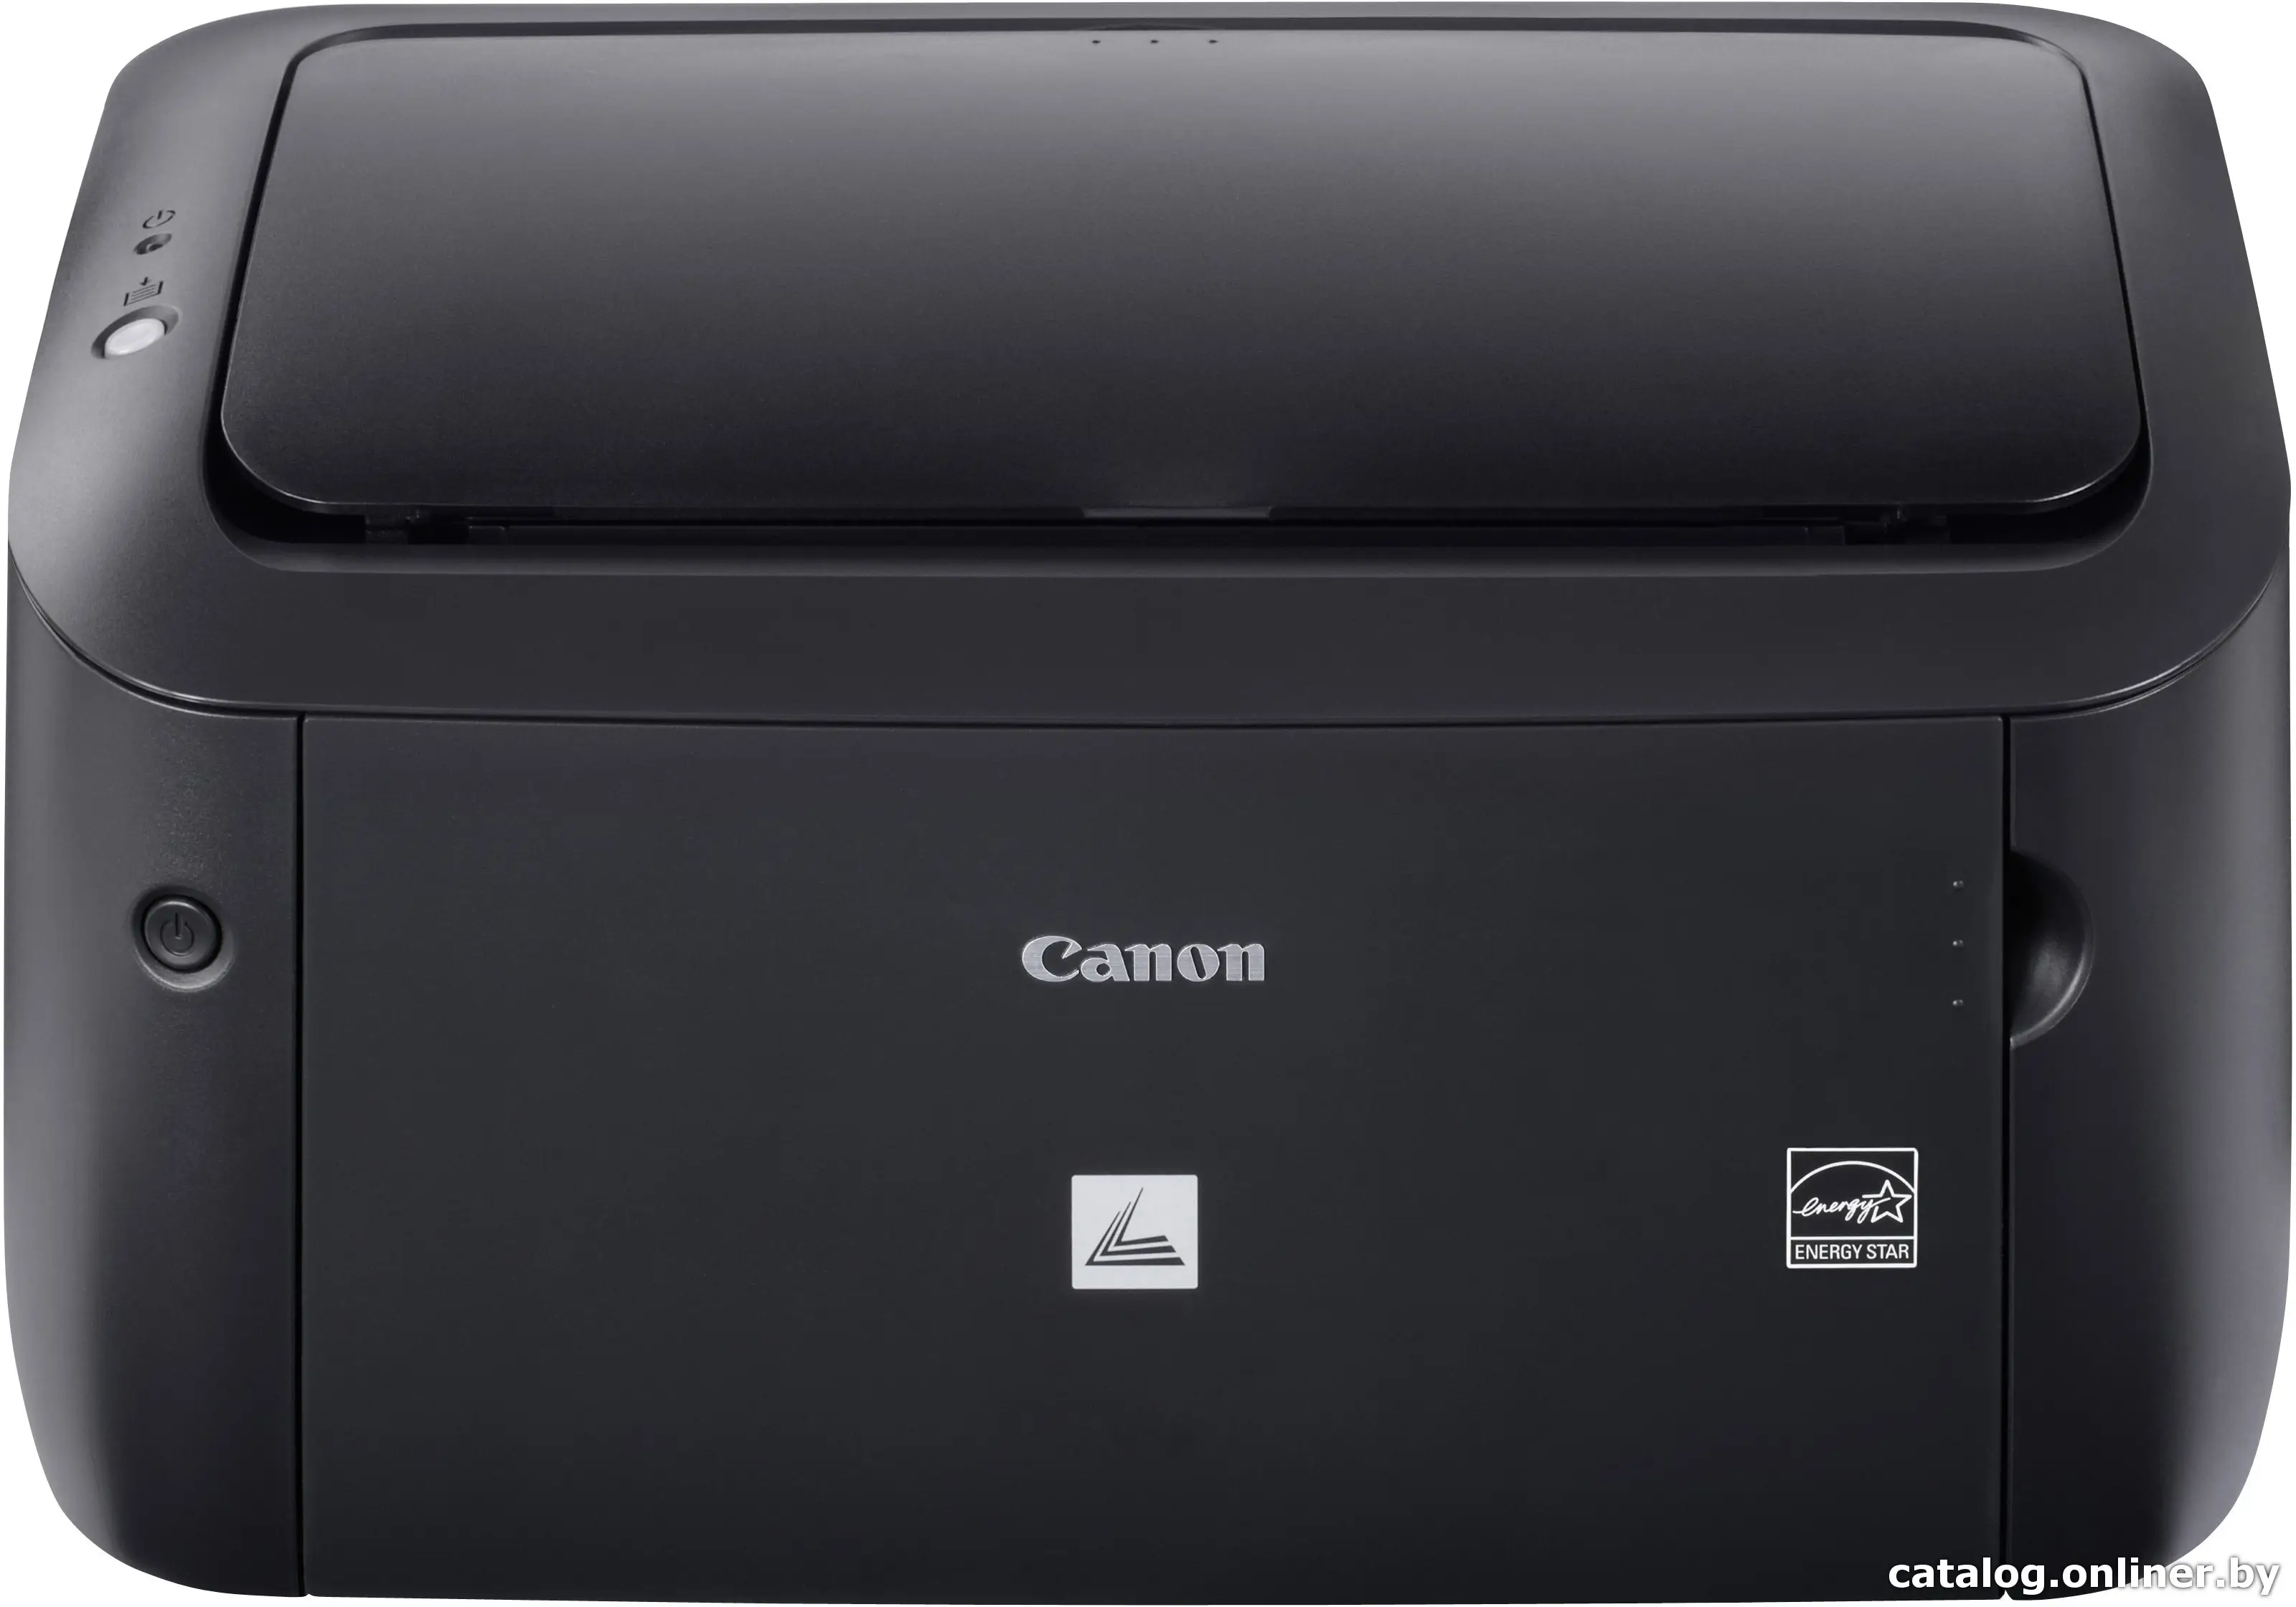 Купить Принтер Canon i-Sensys LBP6030B (8468B042) + 2 картриджа, цена, опт и розница